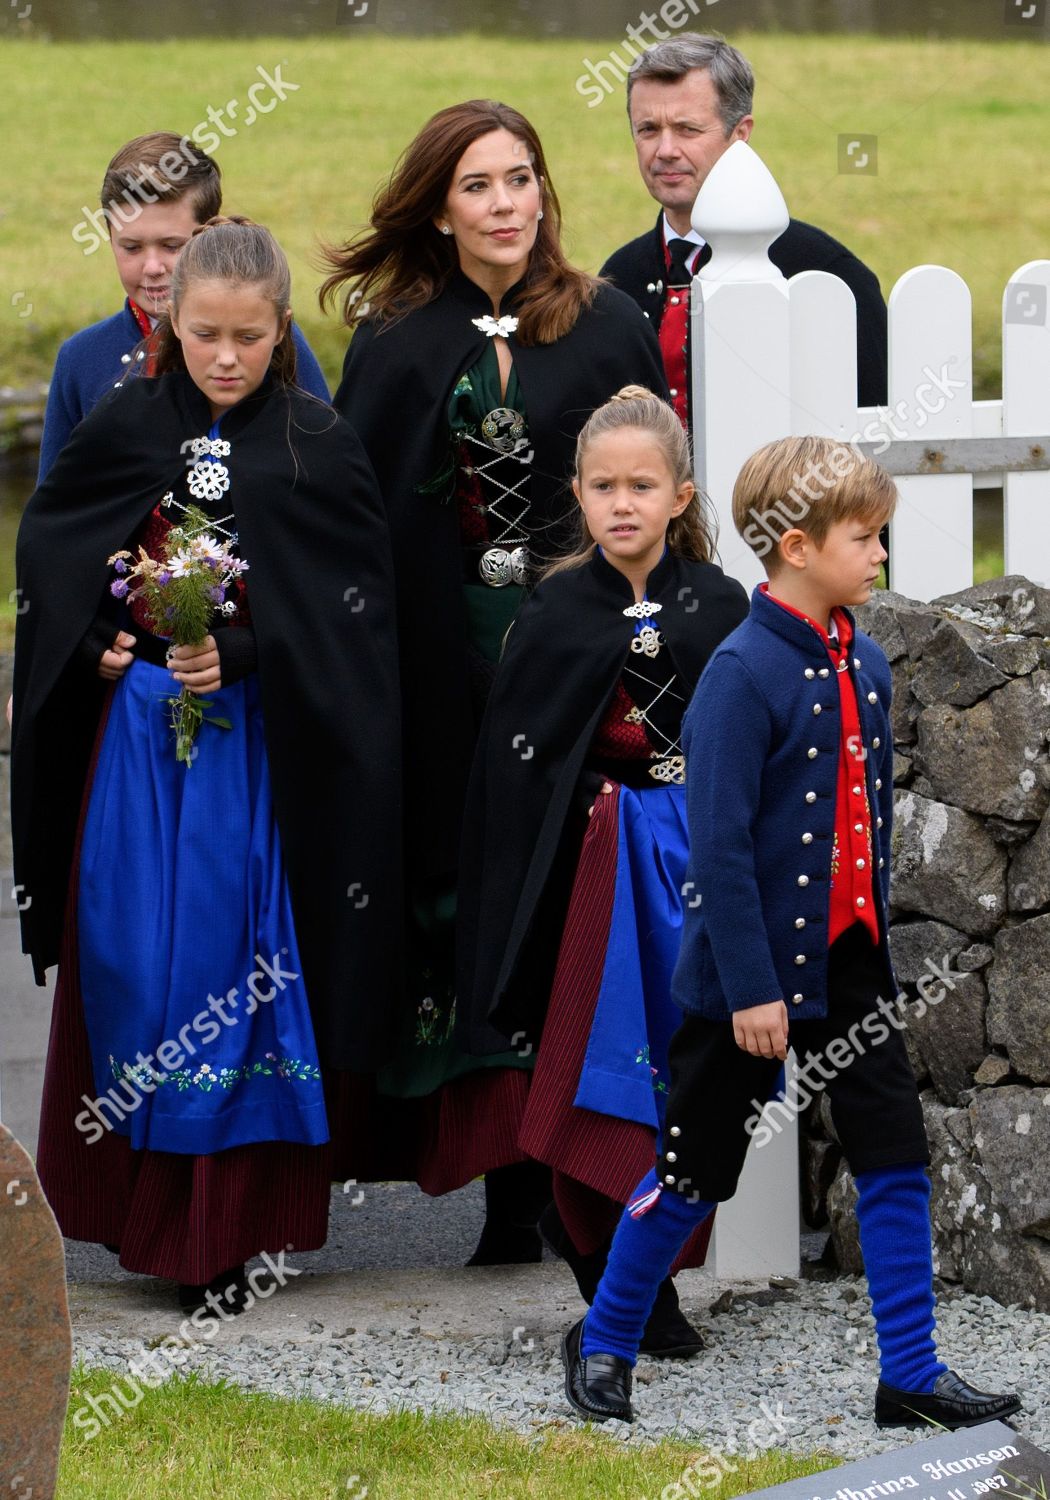 danish-royals-visit-to-the-faroe-islands-denmark-shutterstock-editorial-9808316s.jpg